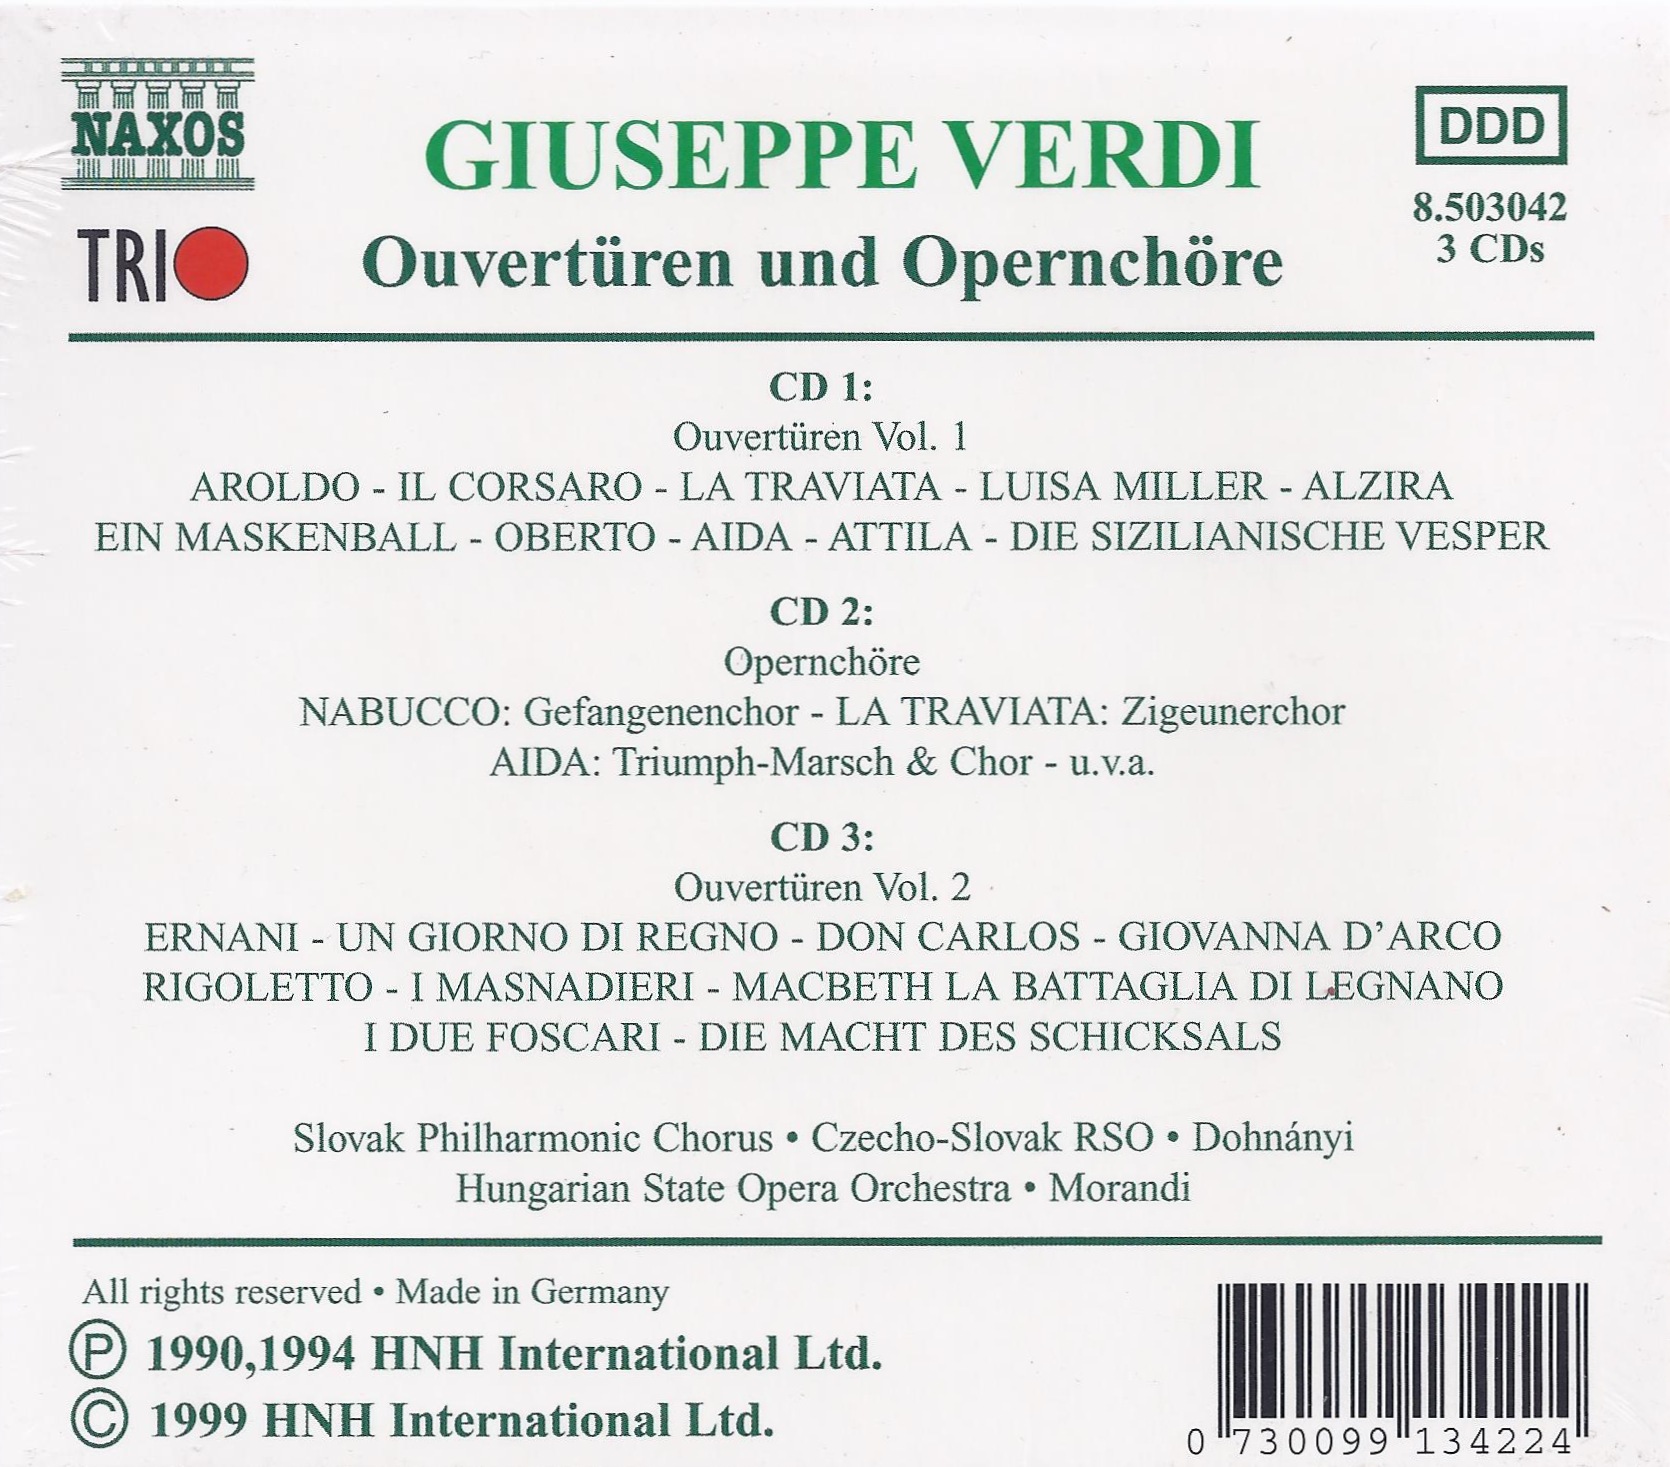 Verdi: Ouverturen und operenchore - slide-1